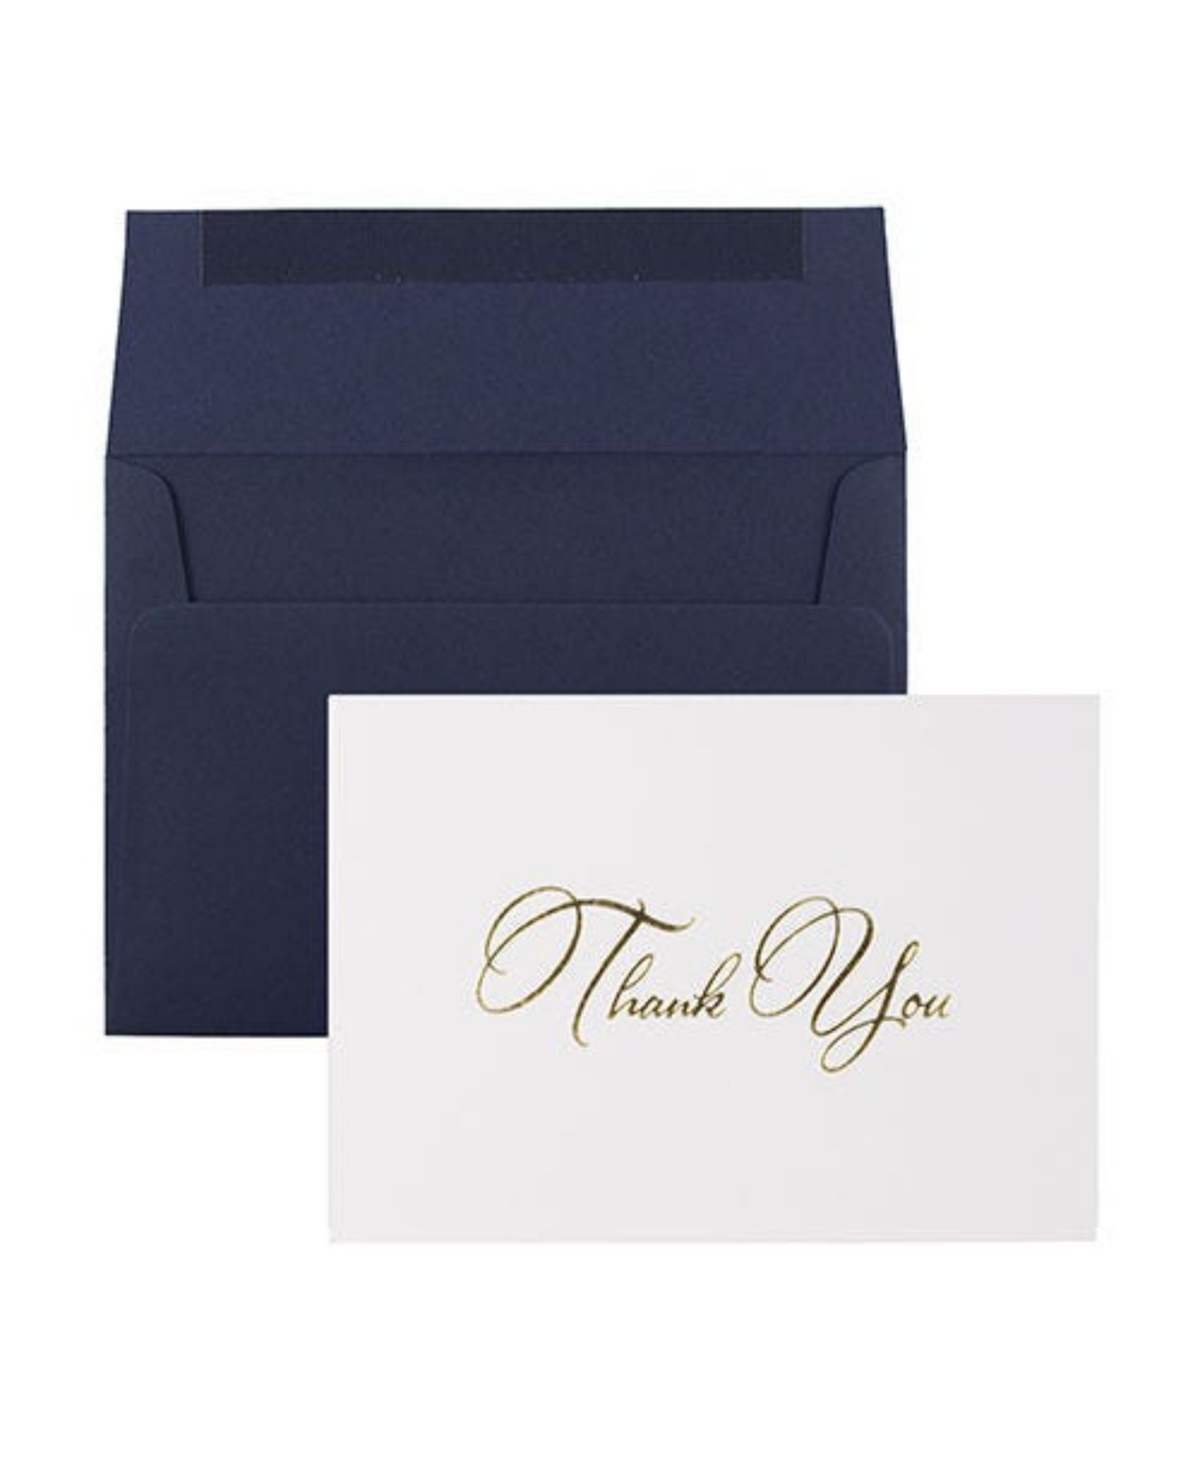 Jam Paper Thank You Card Sets In Gold Script Cards Navy Envelopes